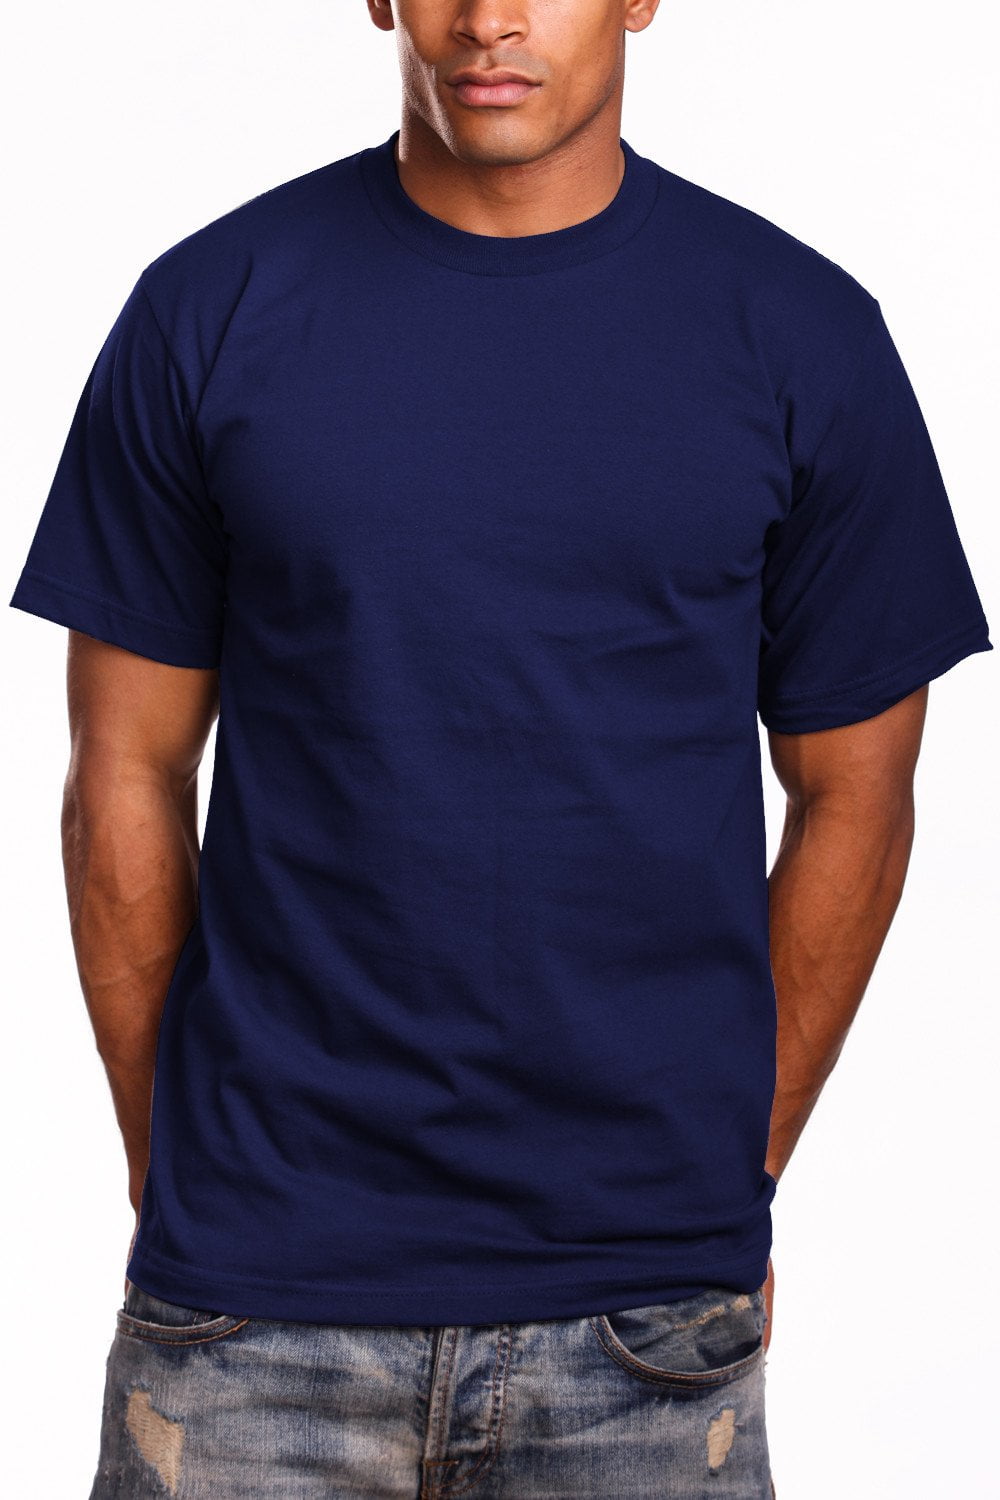 grad afsked Vedholdende Pro 5 Superheavy Short Sleeve T-shirt,Navy Blue,5XL Tall - Walmart.com